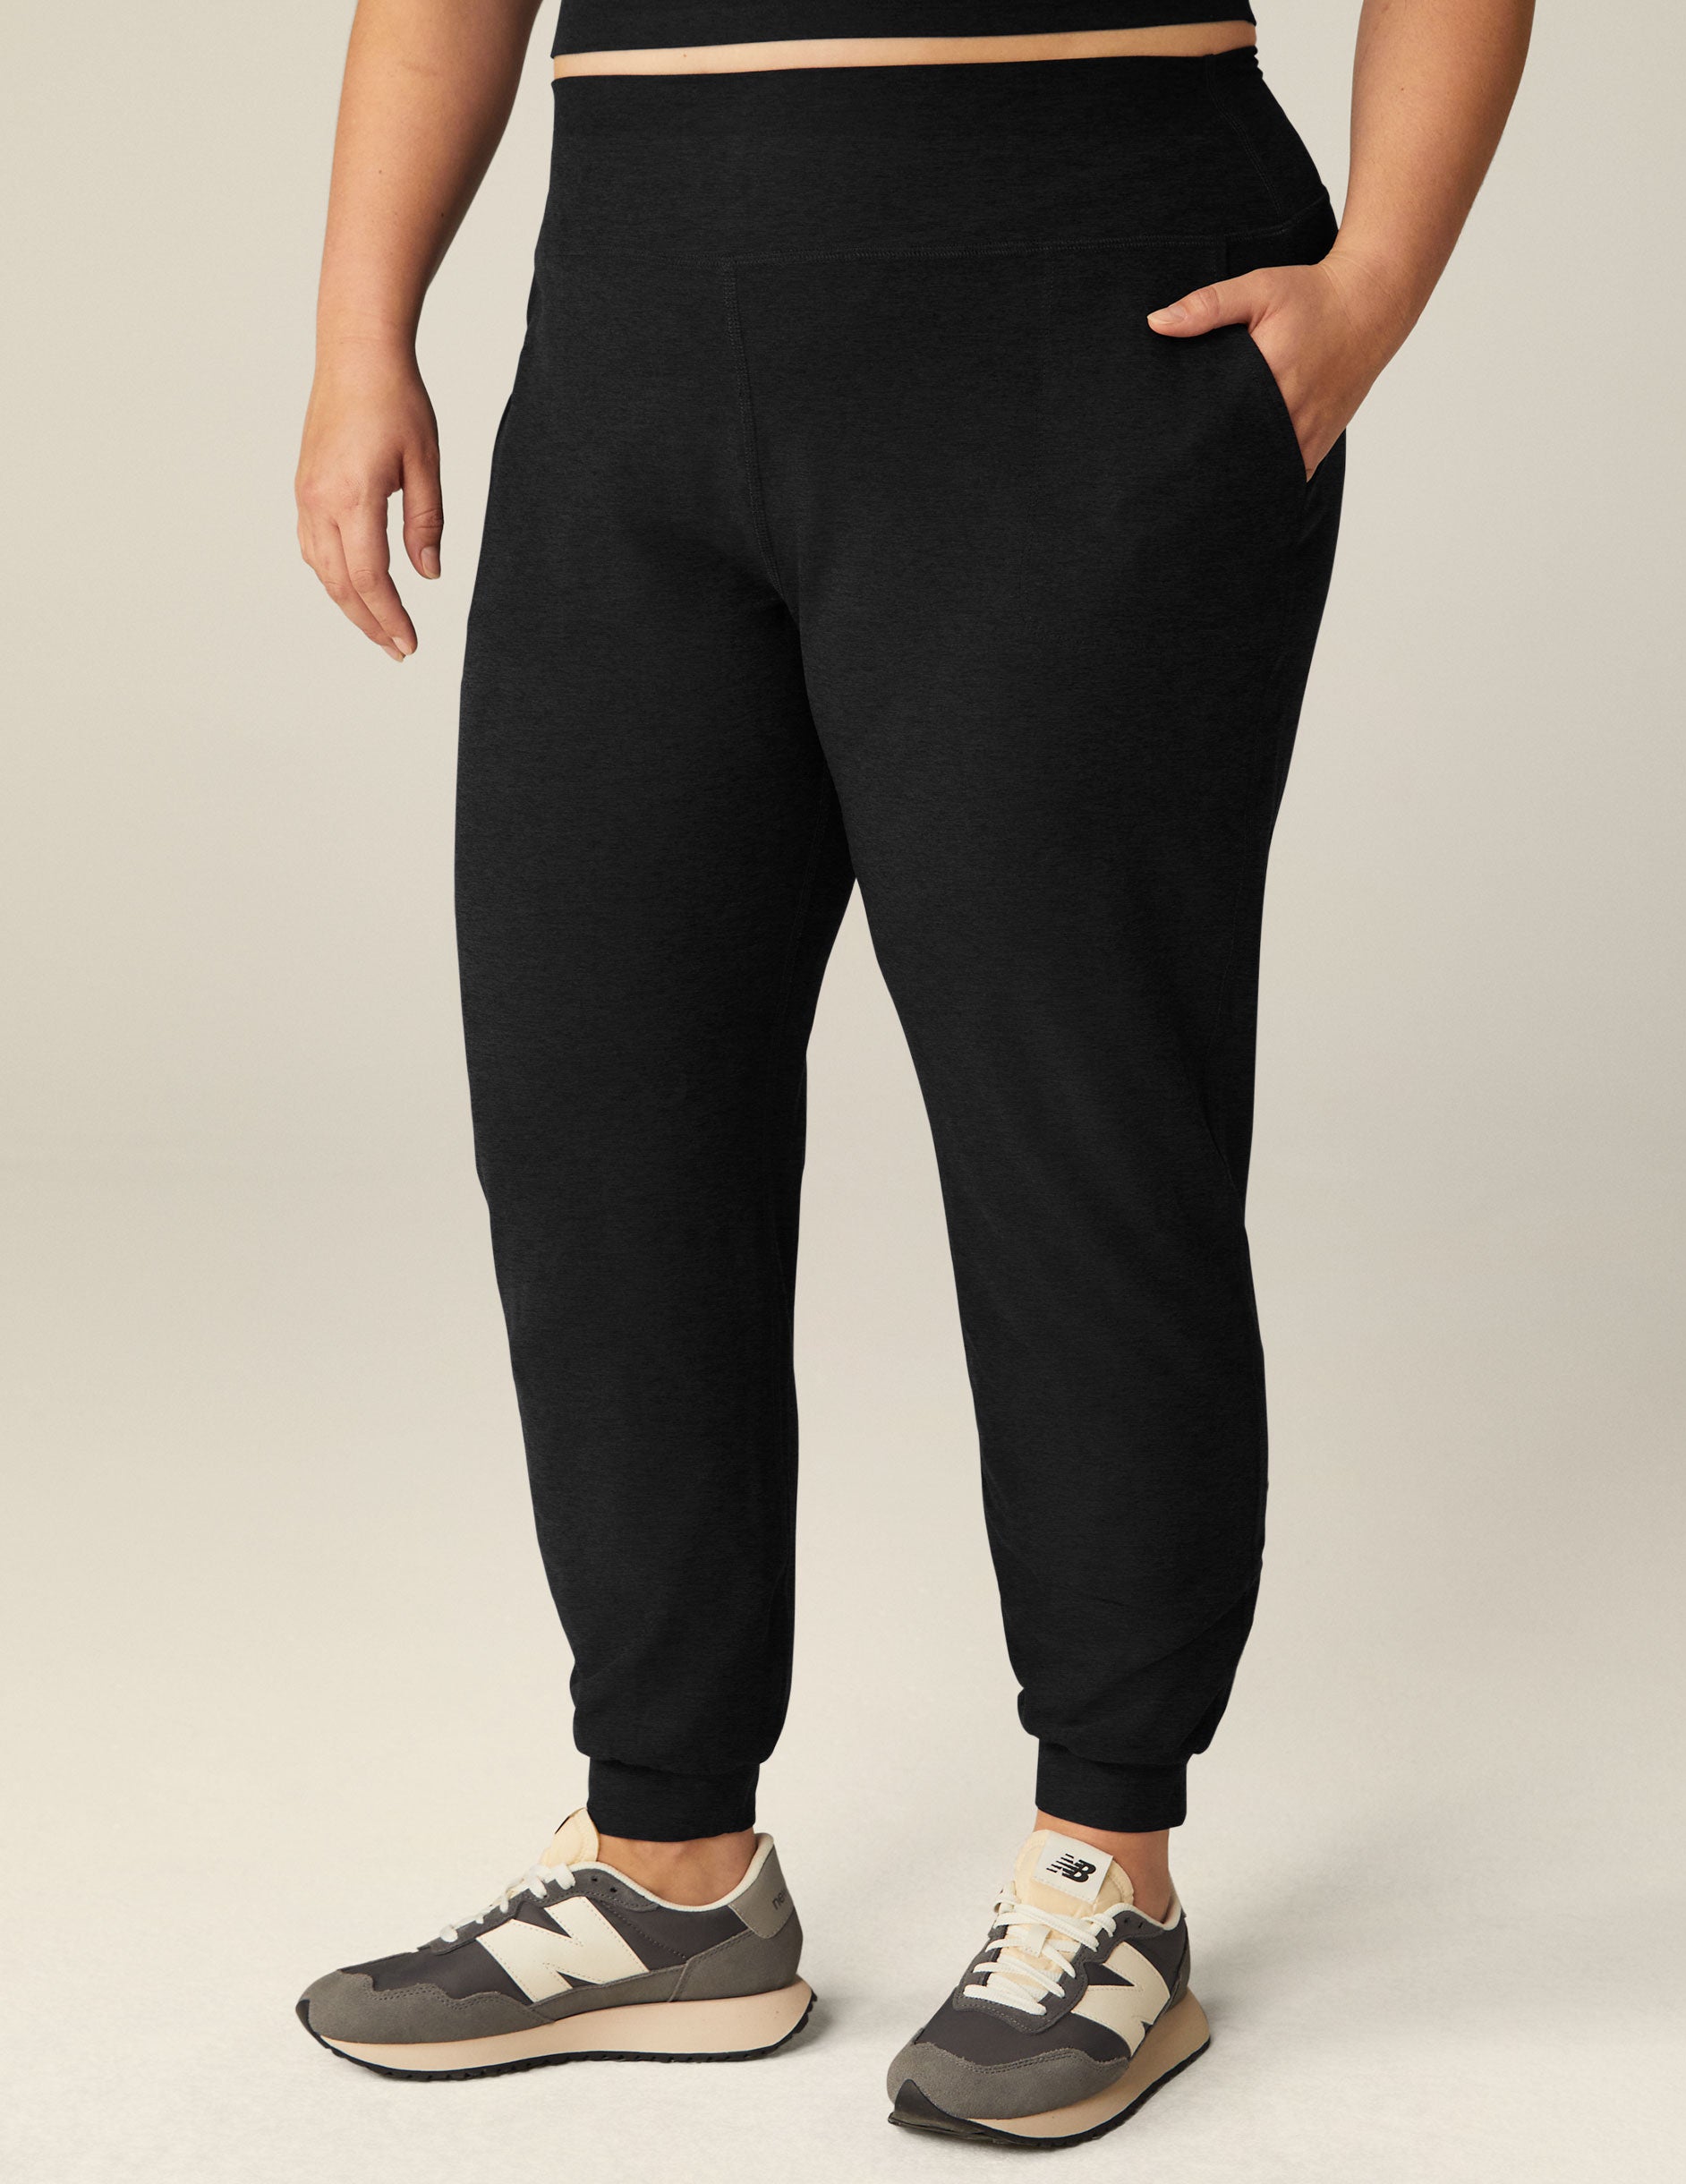 Lululemon Athletica Women Size 6 Relaxed Black Capri Jogger Pants